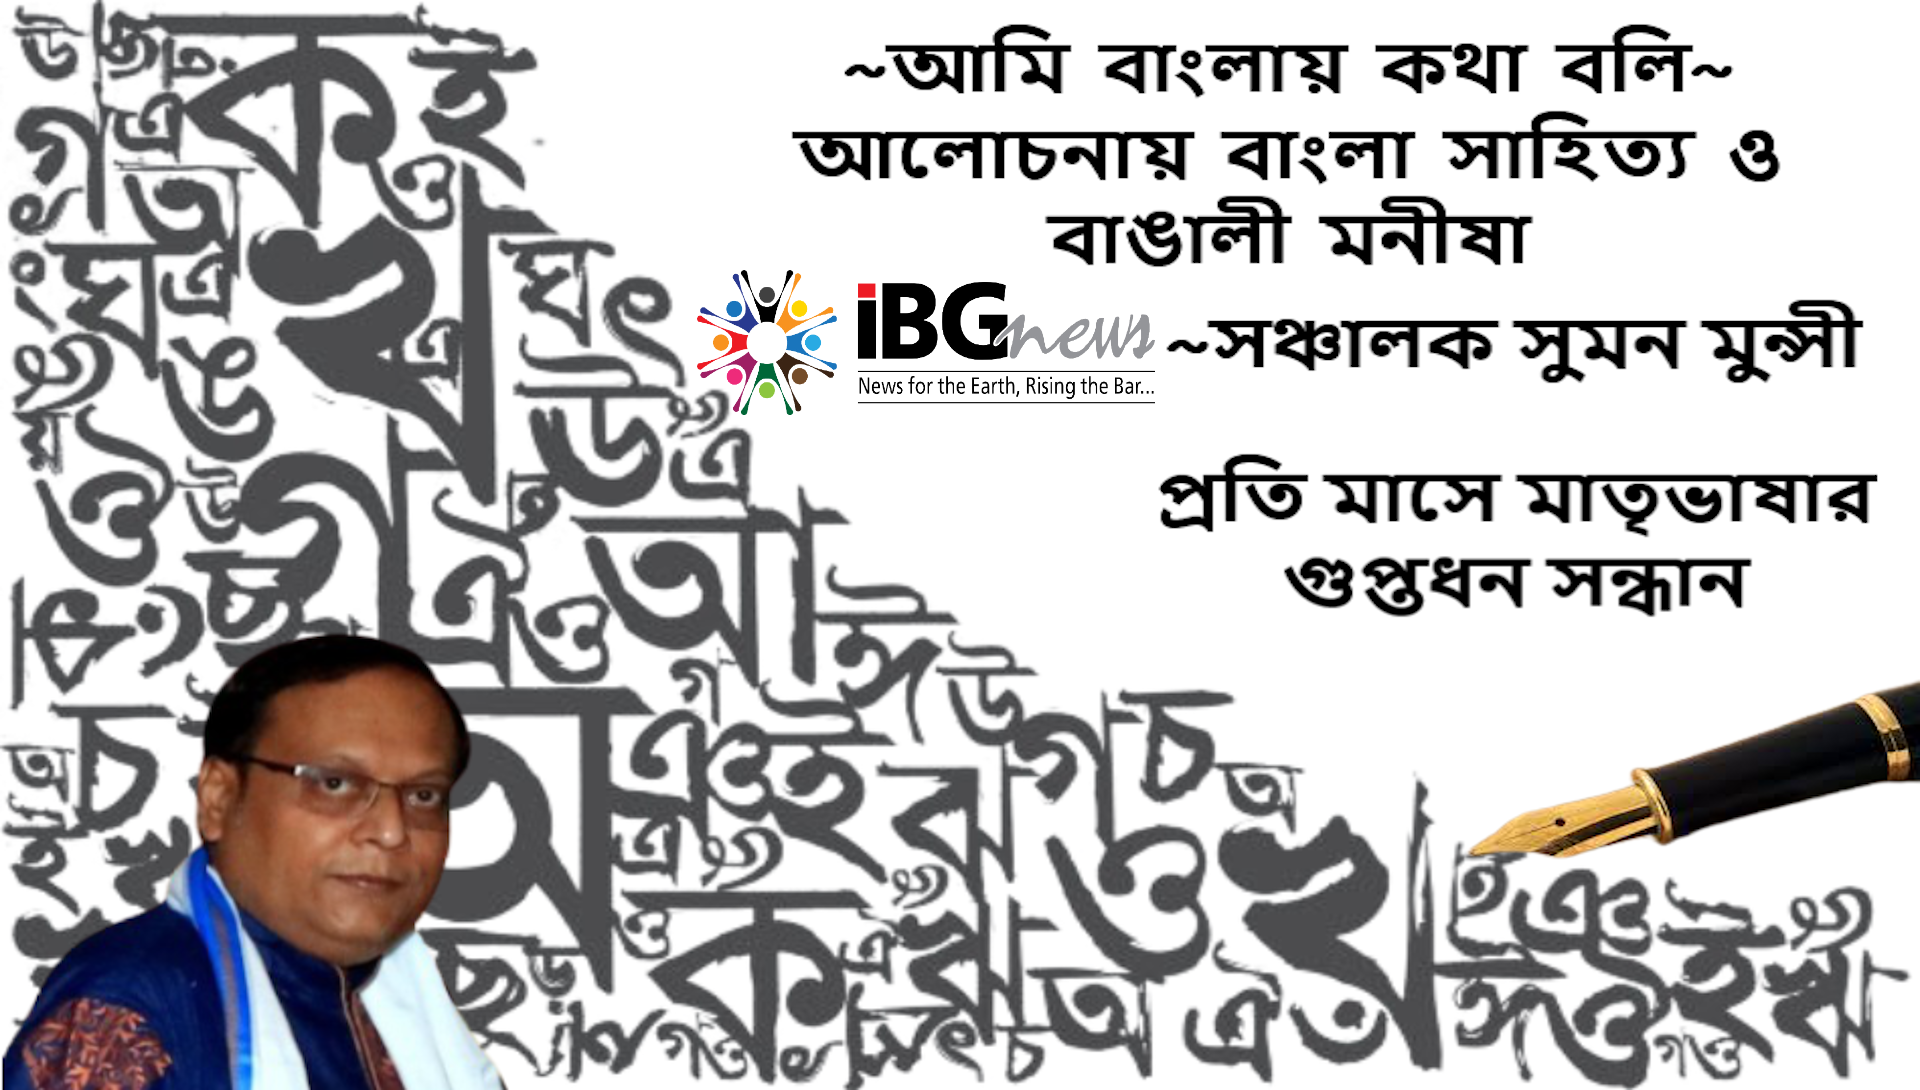 Bangla Literature